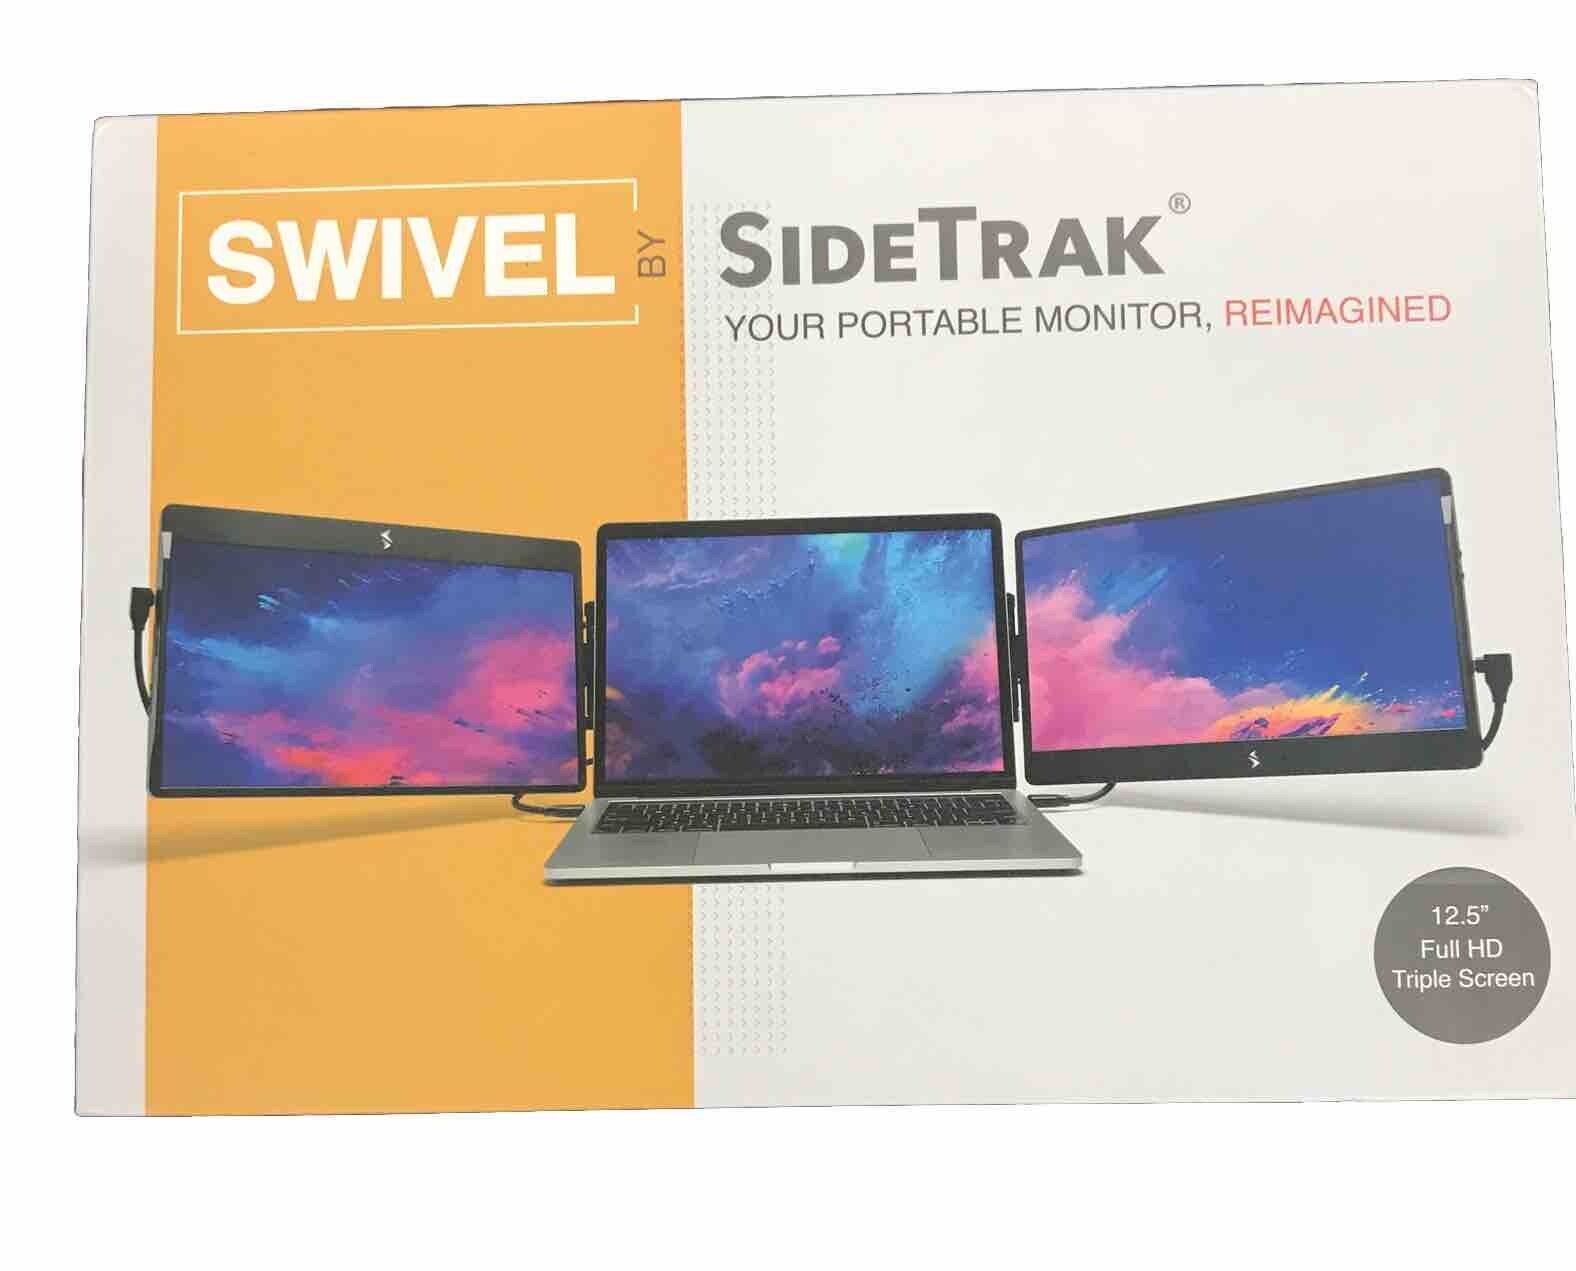 Swivel By SideTrak Your Portable Monitor 12.5” Full HD Triple Screen New